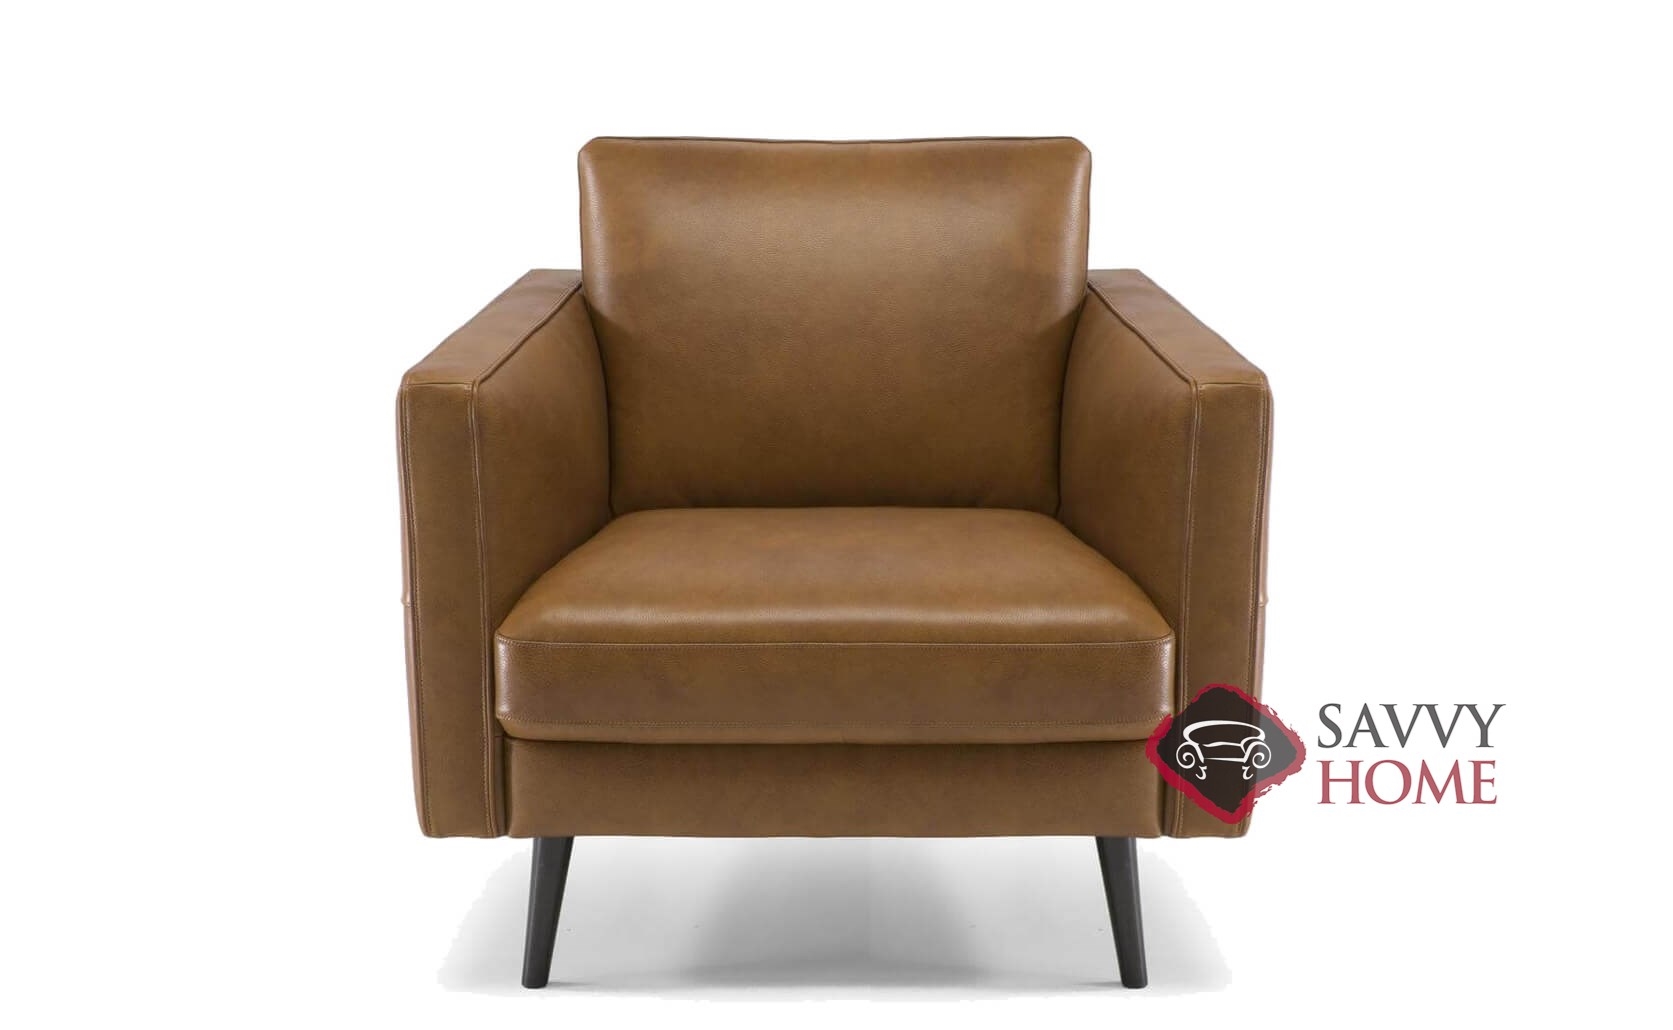 Destrezza C092 Leather Stationary Chair By Natuzzi Is Fully Customizable By You Savvyhomestorecom